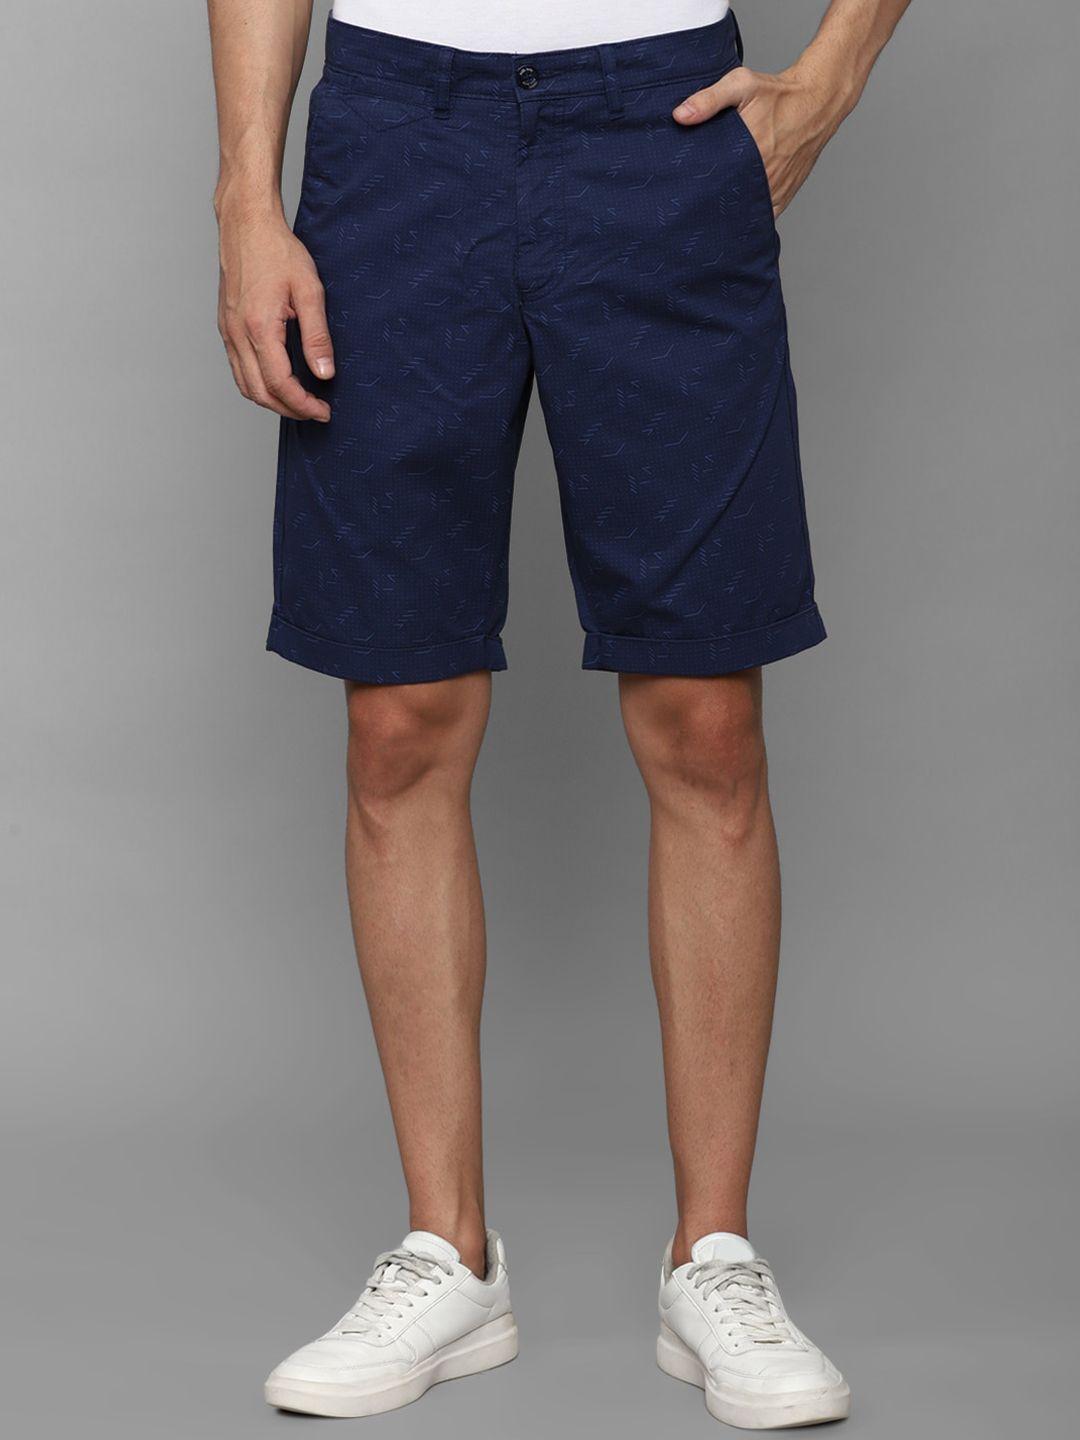 allen-solly-men-geometric-printed-slim-fit-pure-cotton-shorts